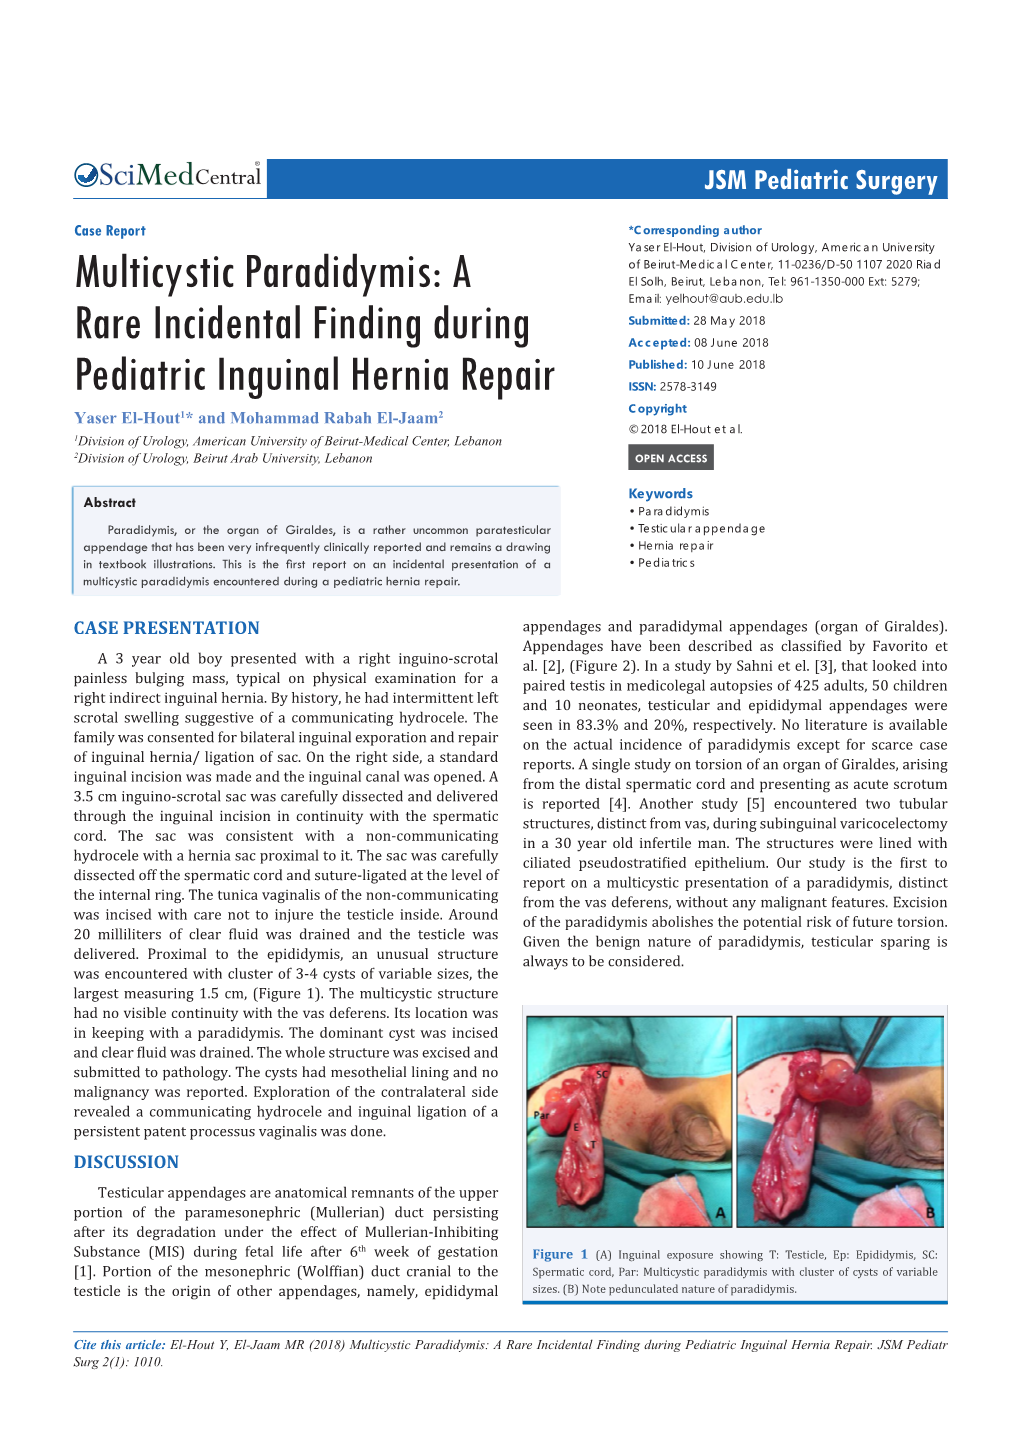 Multicystic Paradidymis: a Rare Incidental Finding During Pediatric Inguinal Hernia Repair